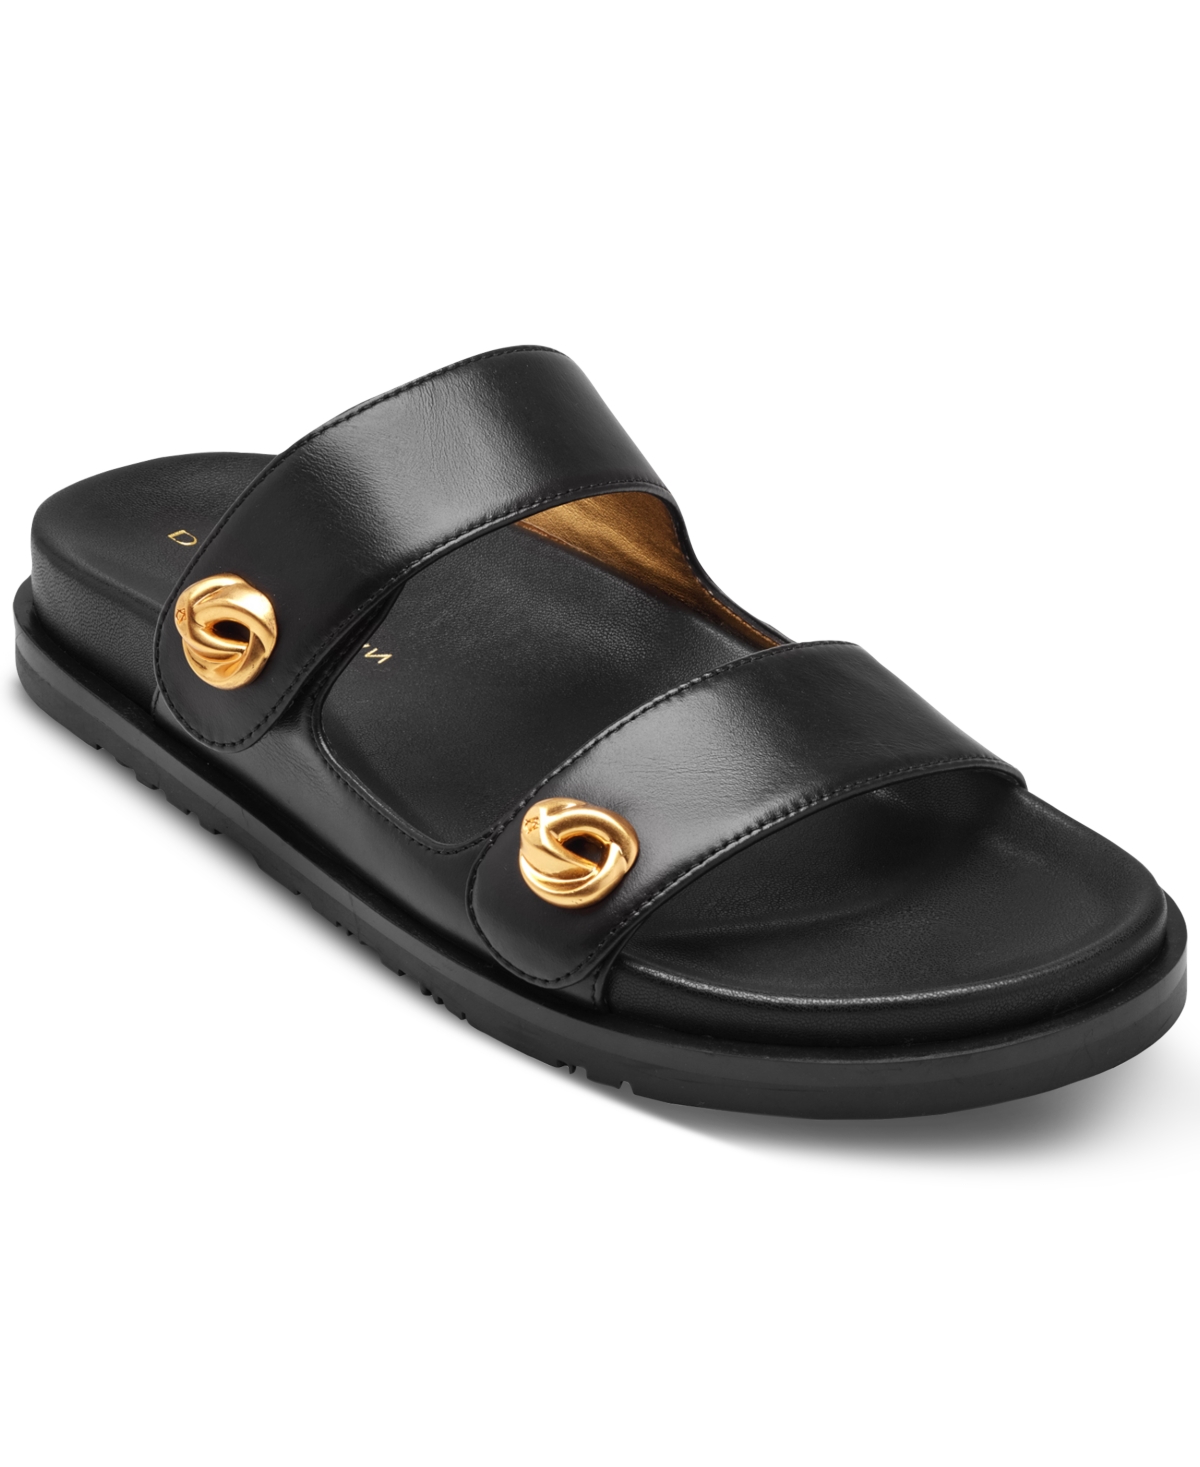 Women's Hazley Double Buckle Sporty Slide Sandals - Black